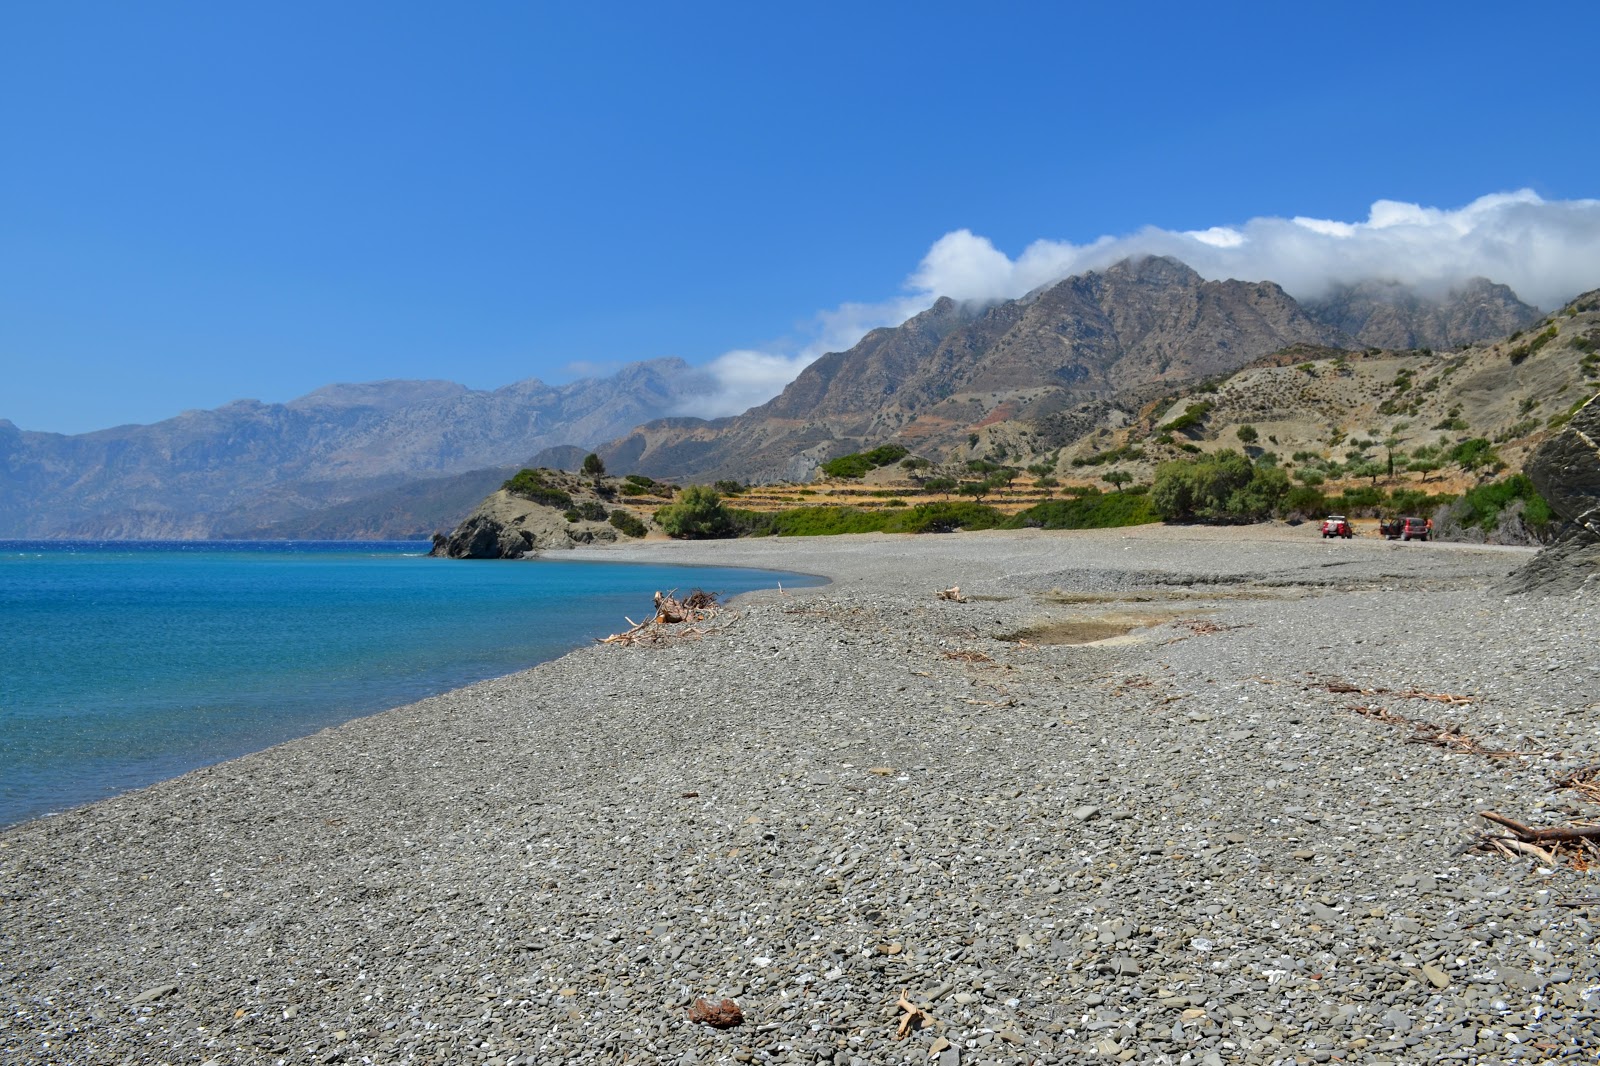 Fotografija Agnotia beach z turkizna čista voda površino